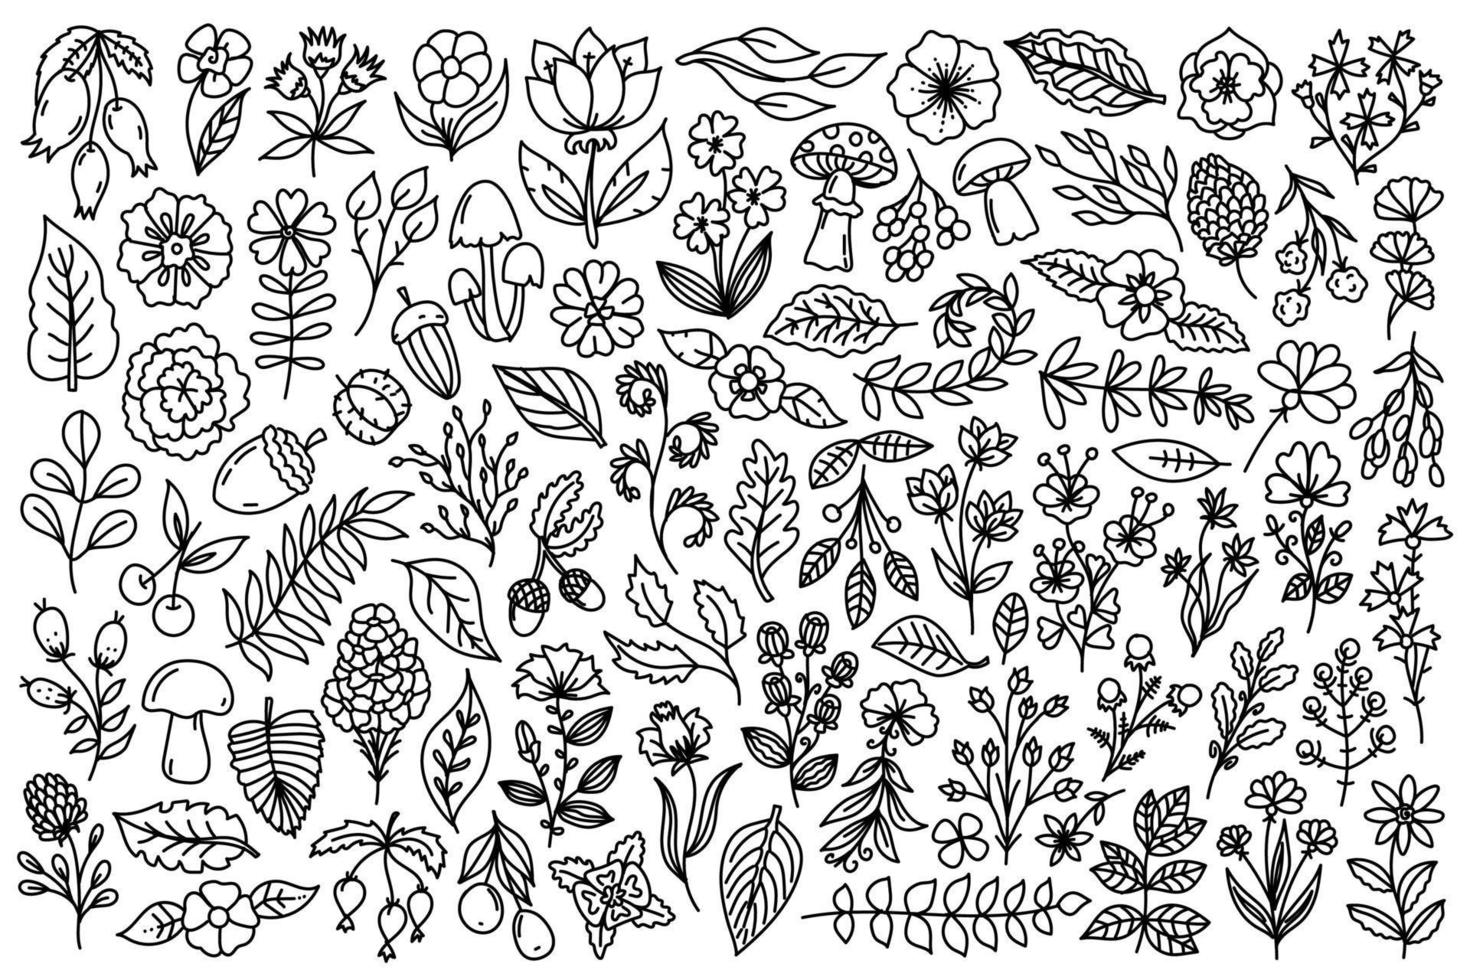 línea Arte naturaleza elementos colocar. colección de bosque diseño elementos como hongos, plantas, hierbas, flores, sucursales, hojas, bellotas en línea Arte garabatear estilo. vector